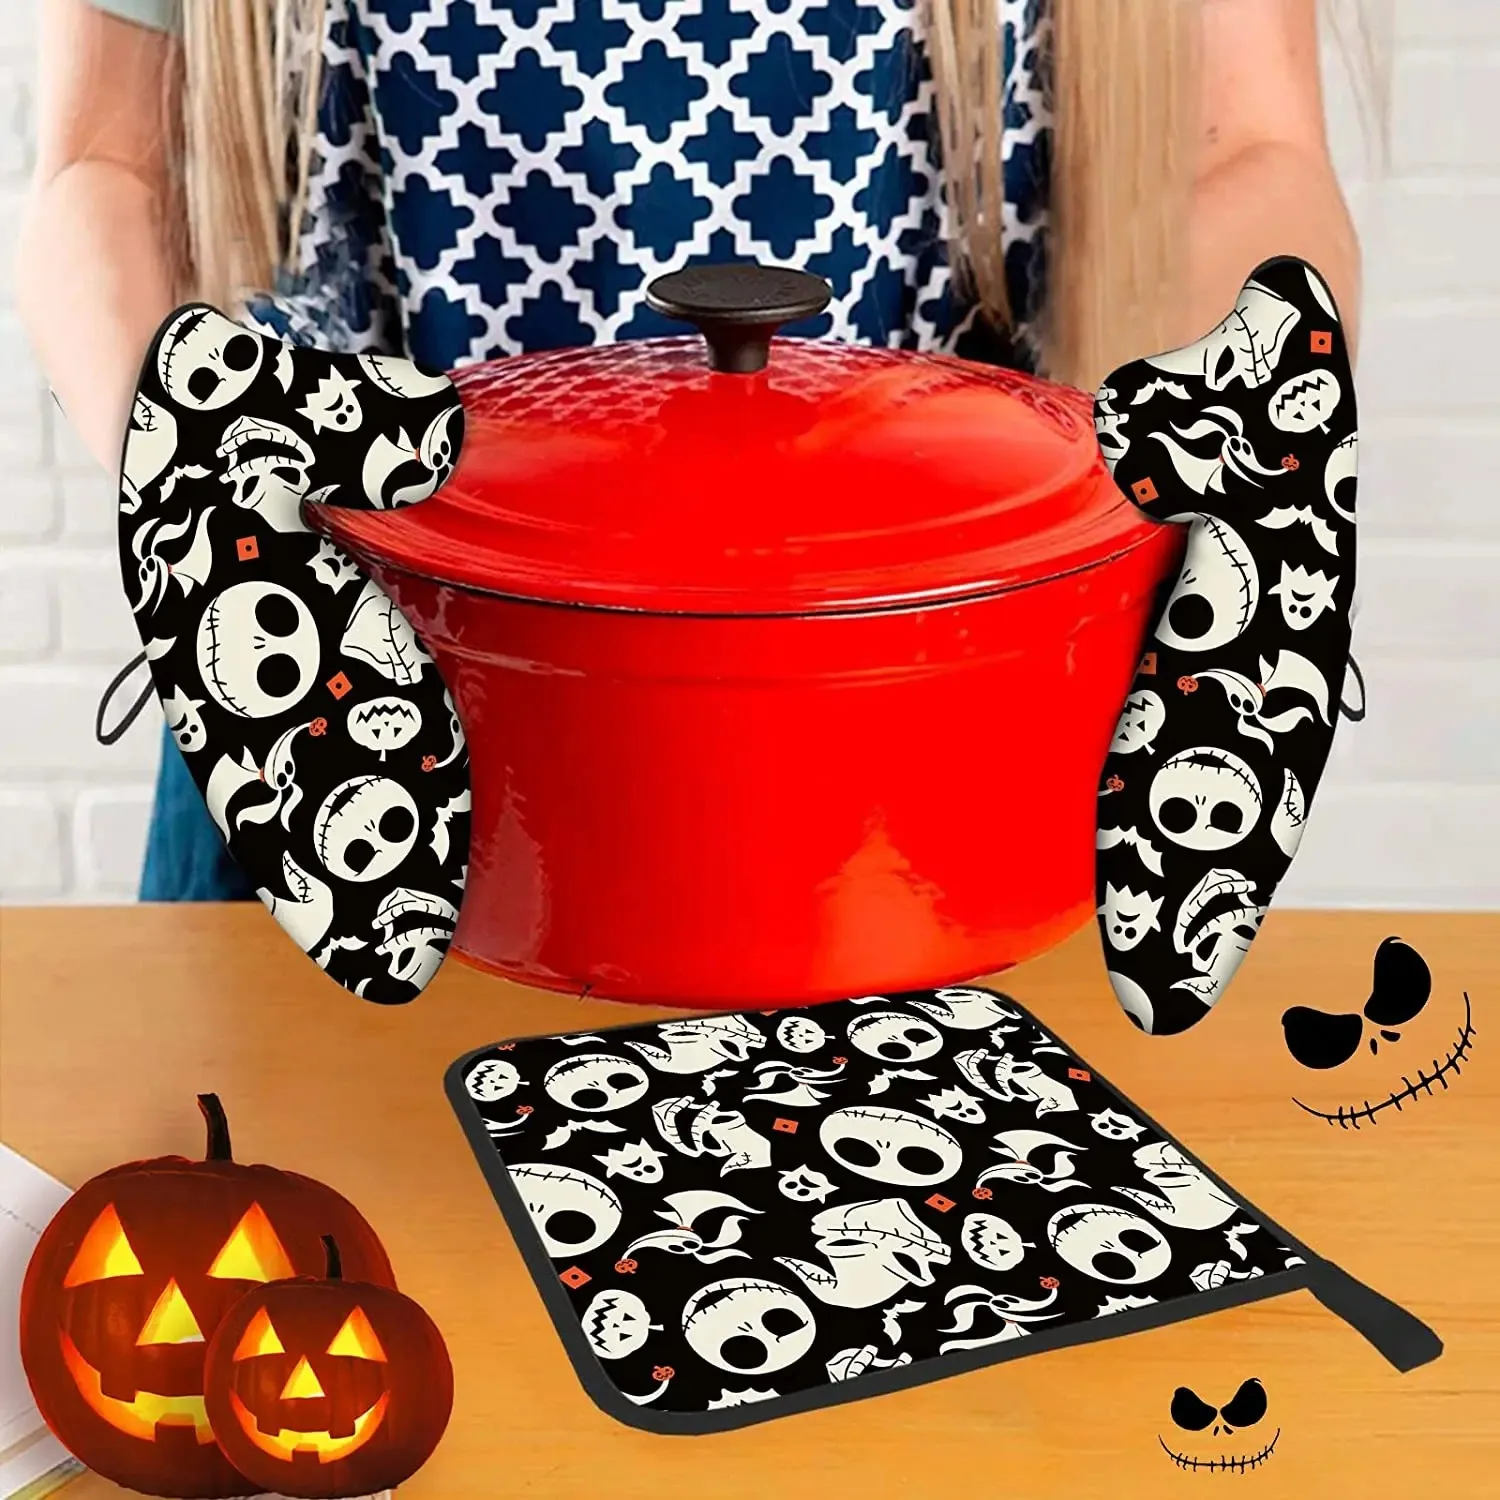 https://ae01.alicdn.com/kf/S91c112b7134148e8967e80bfc0788432r/Halloween-Oven-Mitts-and-Pot-Holders-Sets-Christmas-Kitchen-Heat-Resistant-Non-Slip-Oven-Gloves-for.jpg